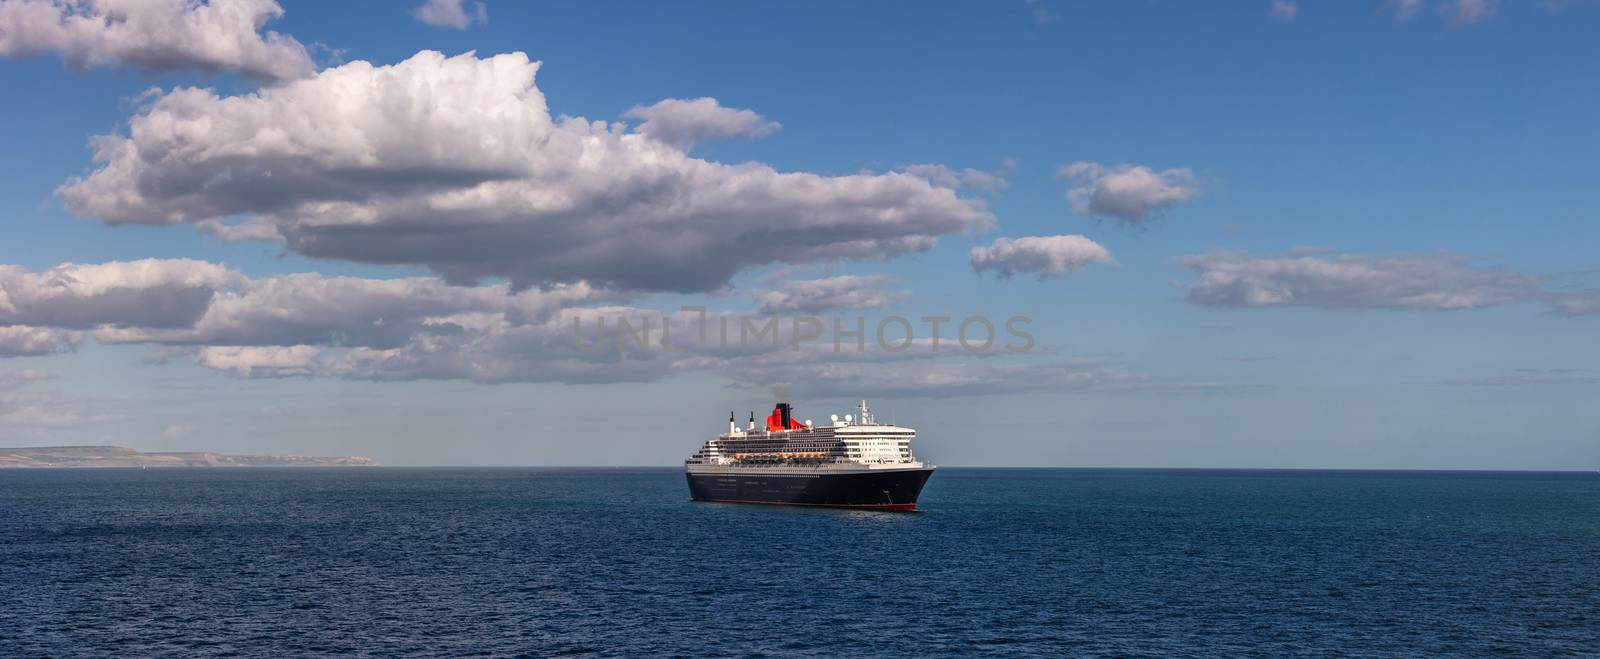 Weymouth Bay, United Kingdom - July 6, 2020: Beautiful panoramic shot of Cunard cruise ship Queen Mary 2 anchored in Weymouth Bay. Beautiful blue sky as a background.